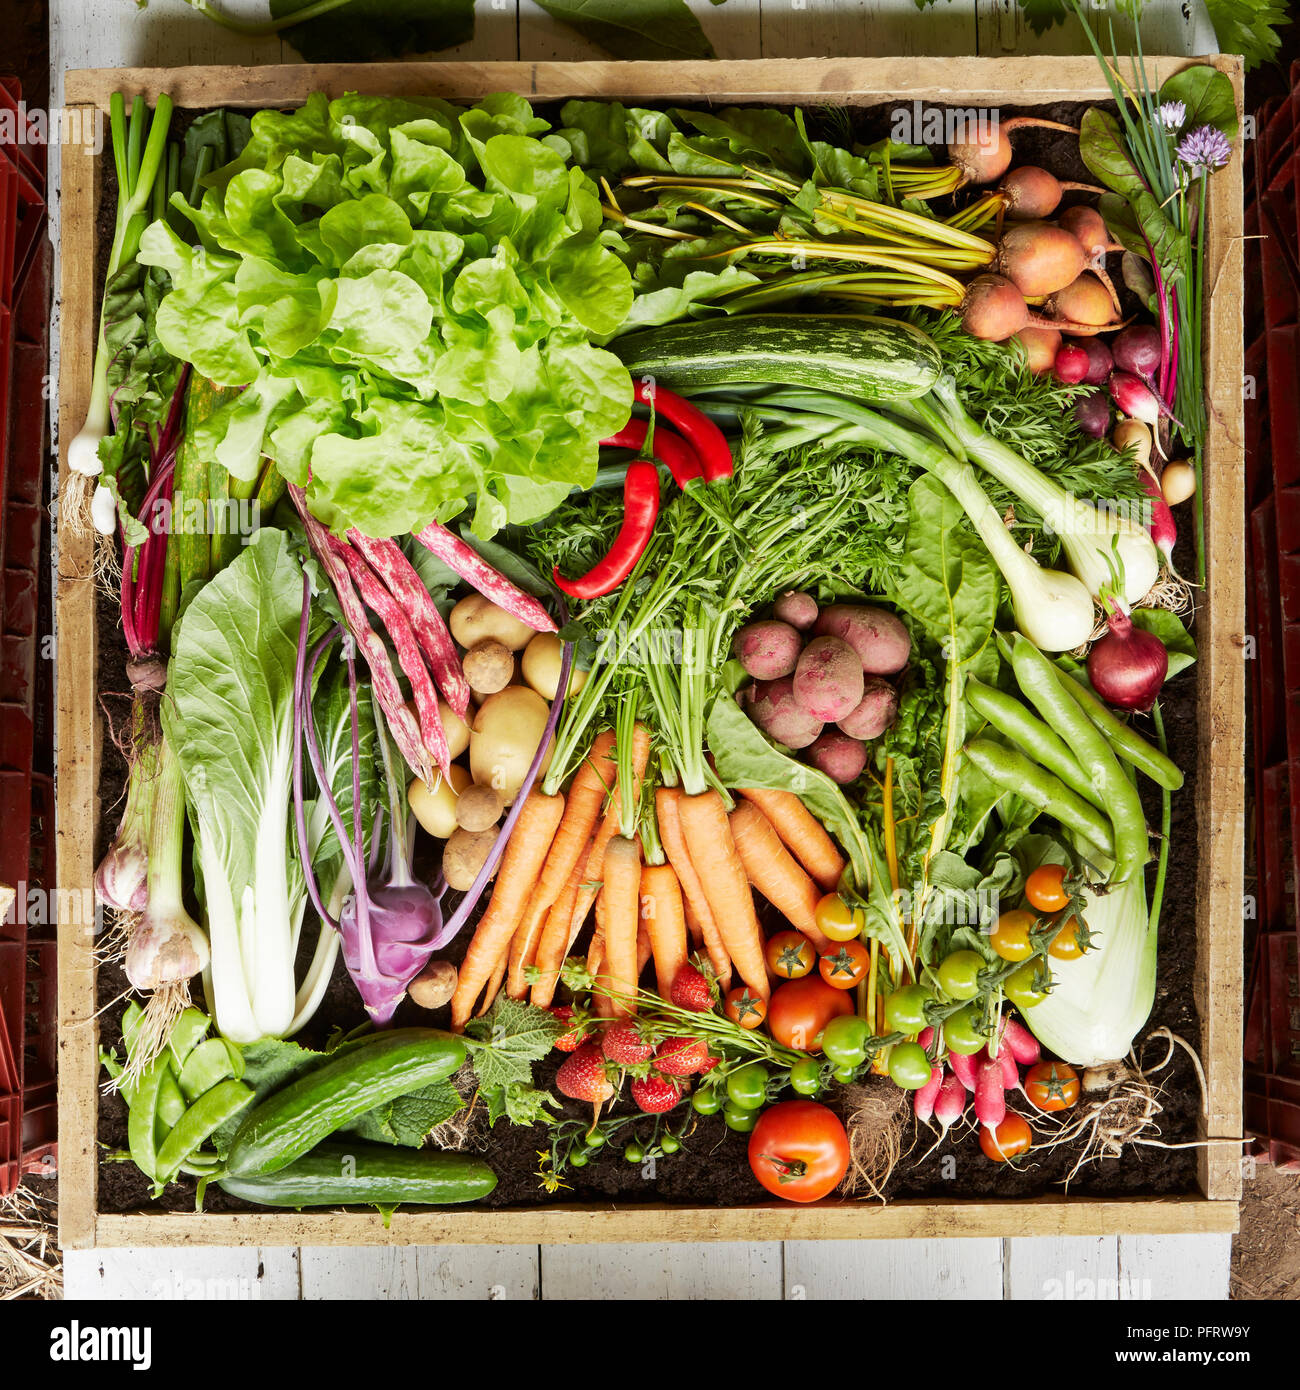 Range of biodynamic vegetables Stock Photo